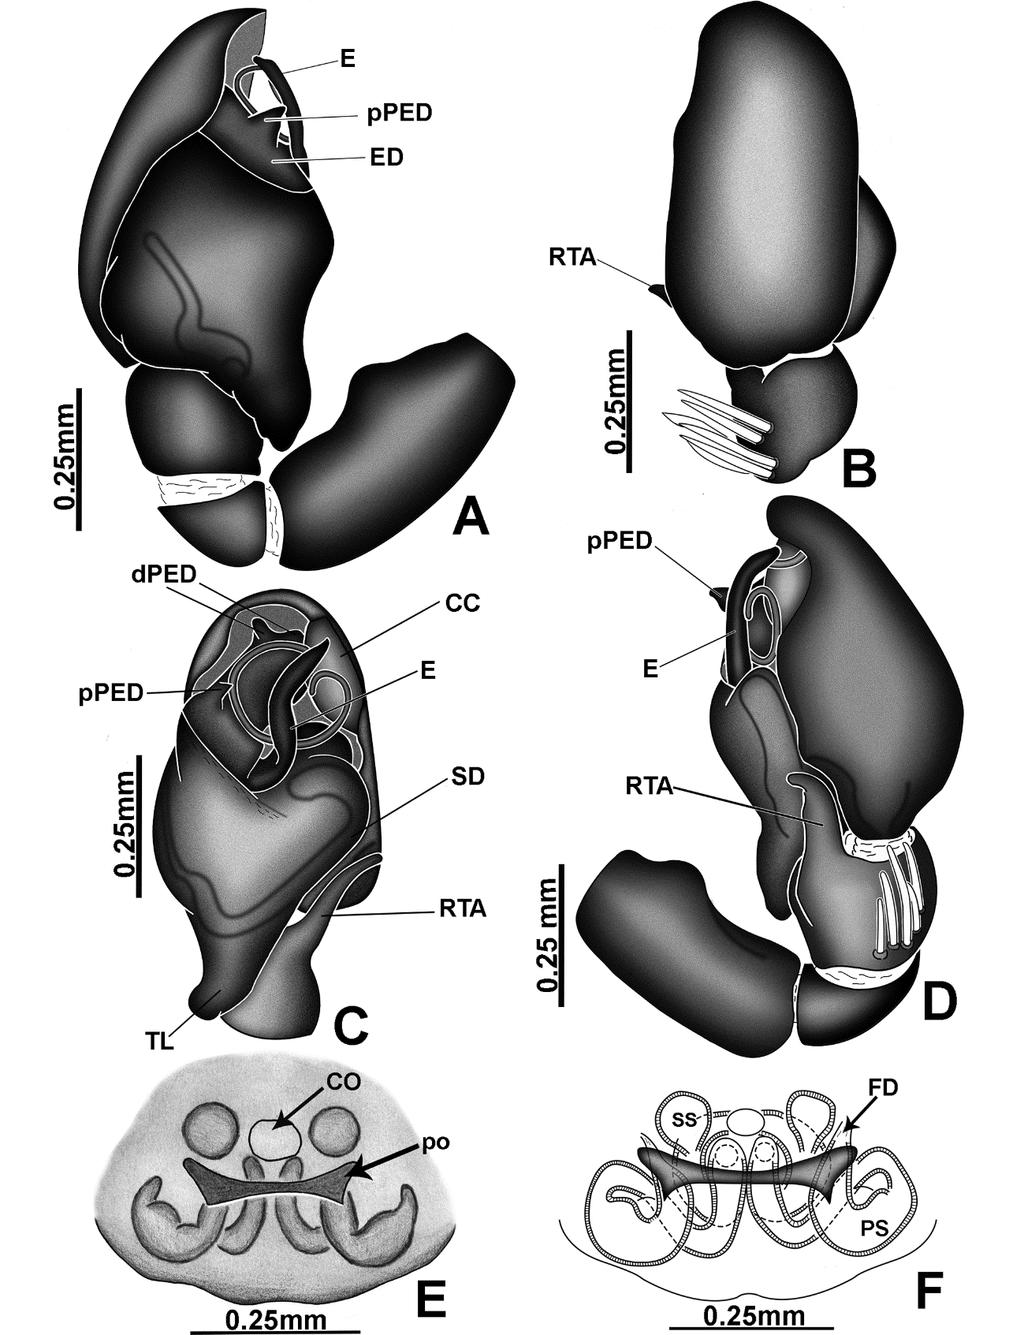 39 FIGURE 14. Amphidraus simplex sp. nov. A male palp, prolateral view; B same, dorsal view; C same, ventral view; D same, retrolateral view; E epigyne, ventral view; F Same, cleared, ventral view.